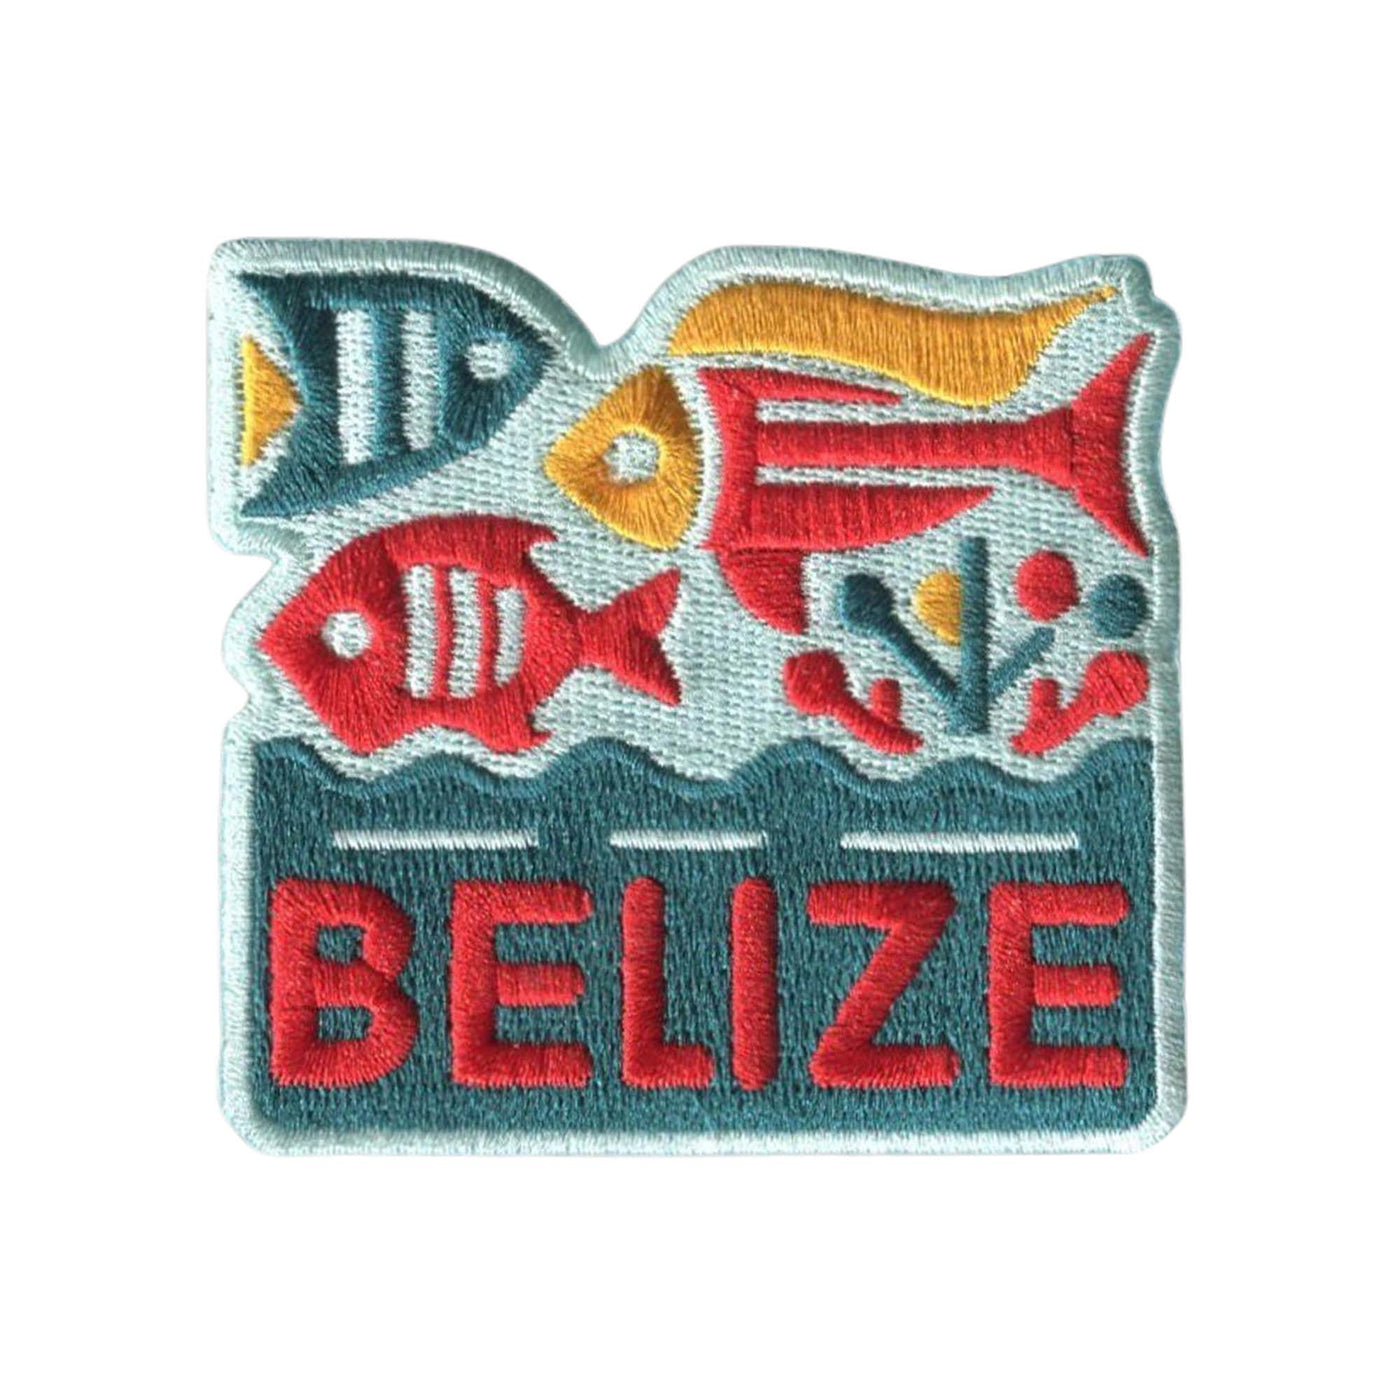 Belize Hook Hook Patch